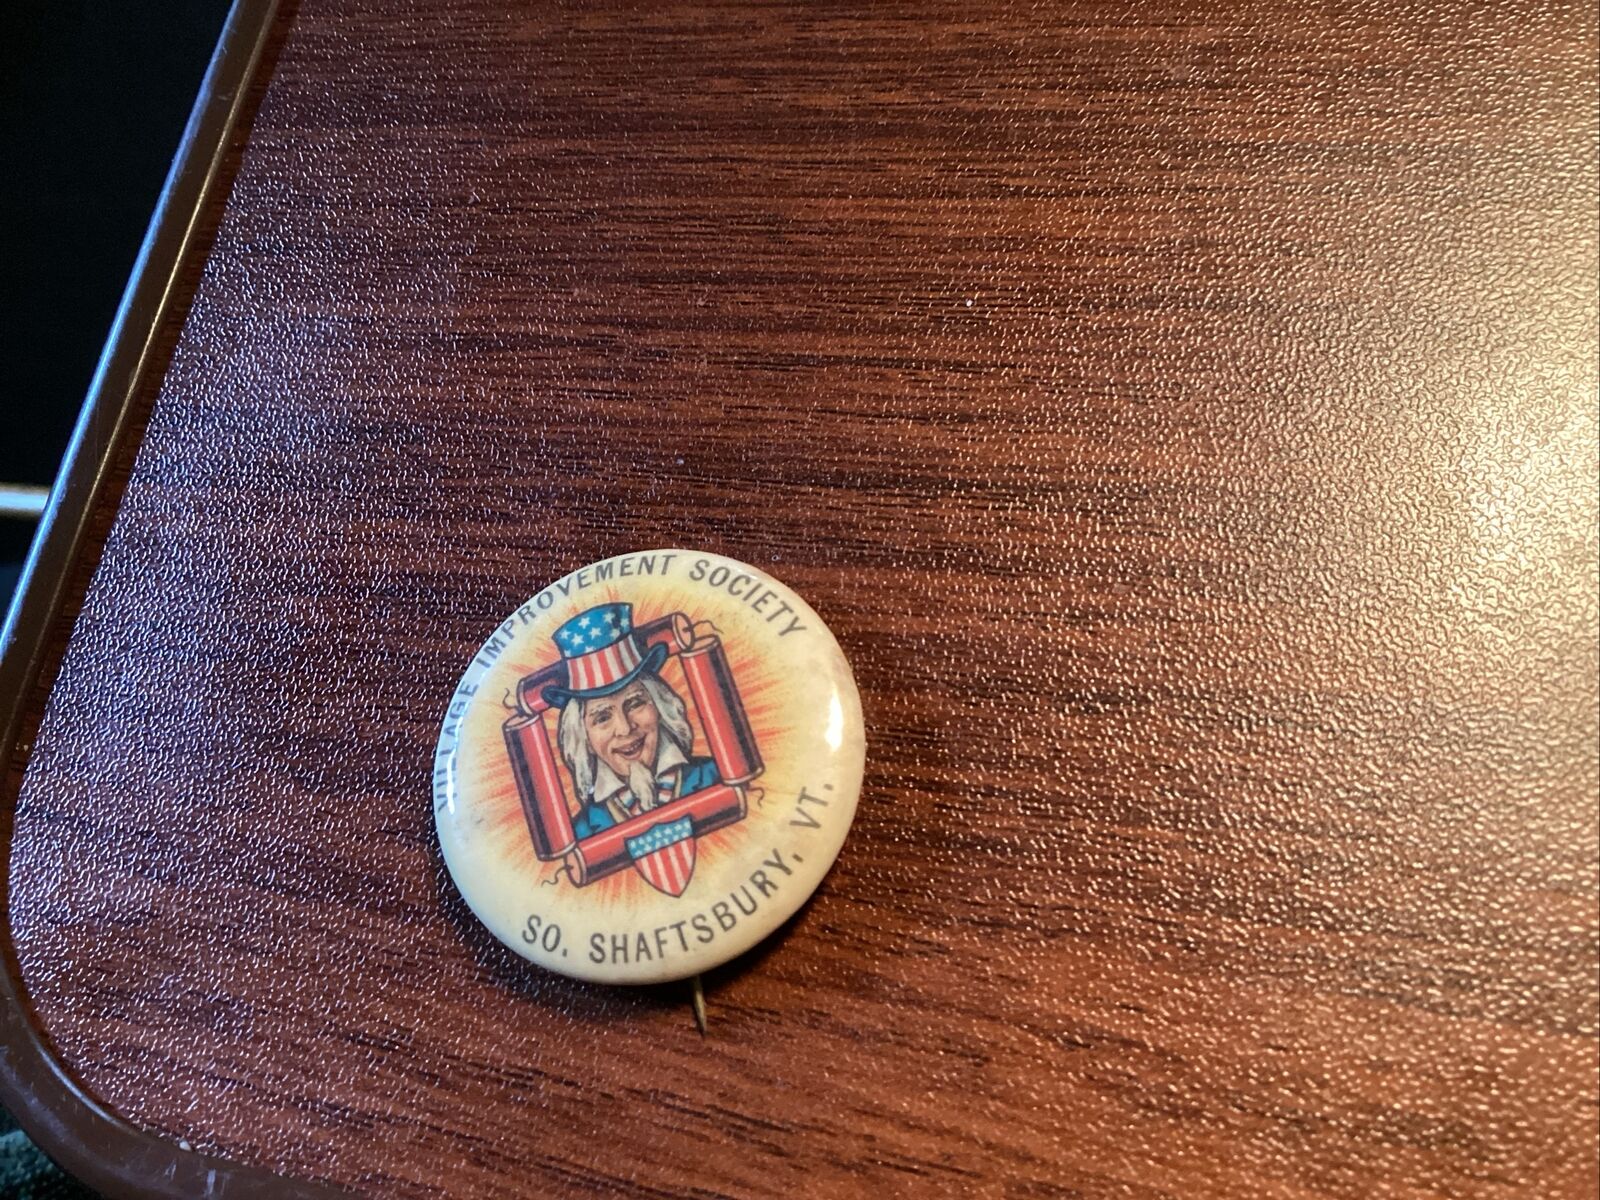 1896 Antique Uncle Sam Pinback Pin So. Shaftsbury Vt.  Improvement Society 